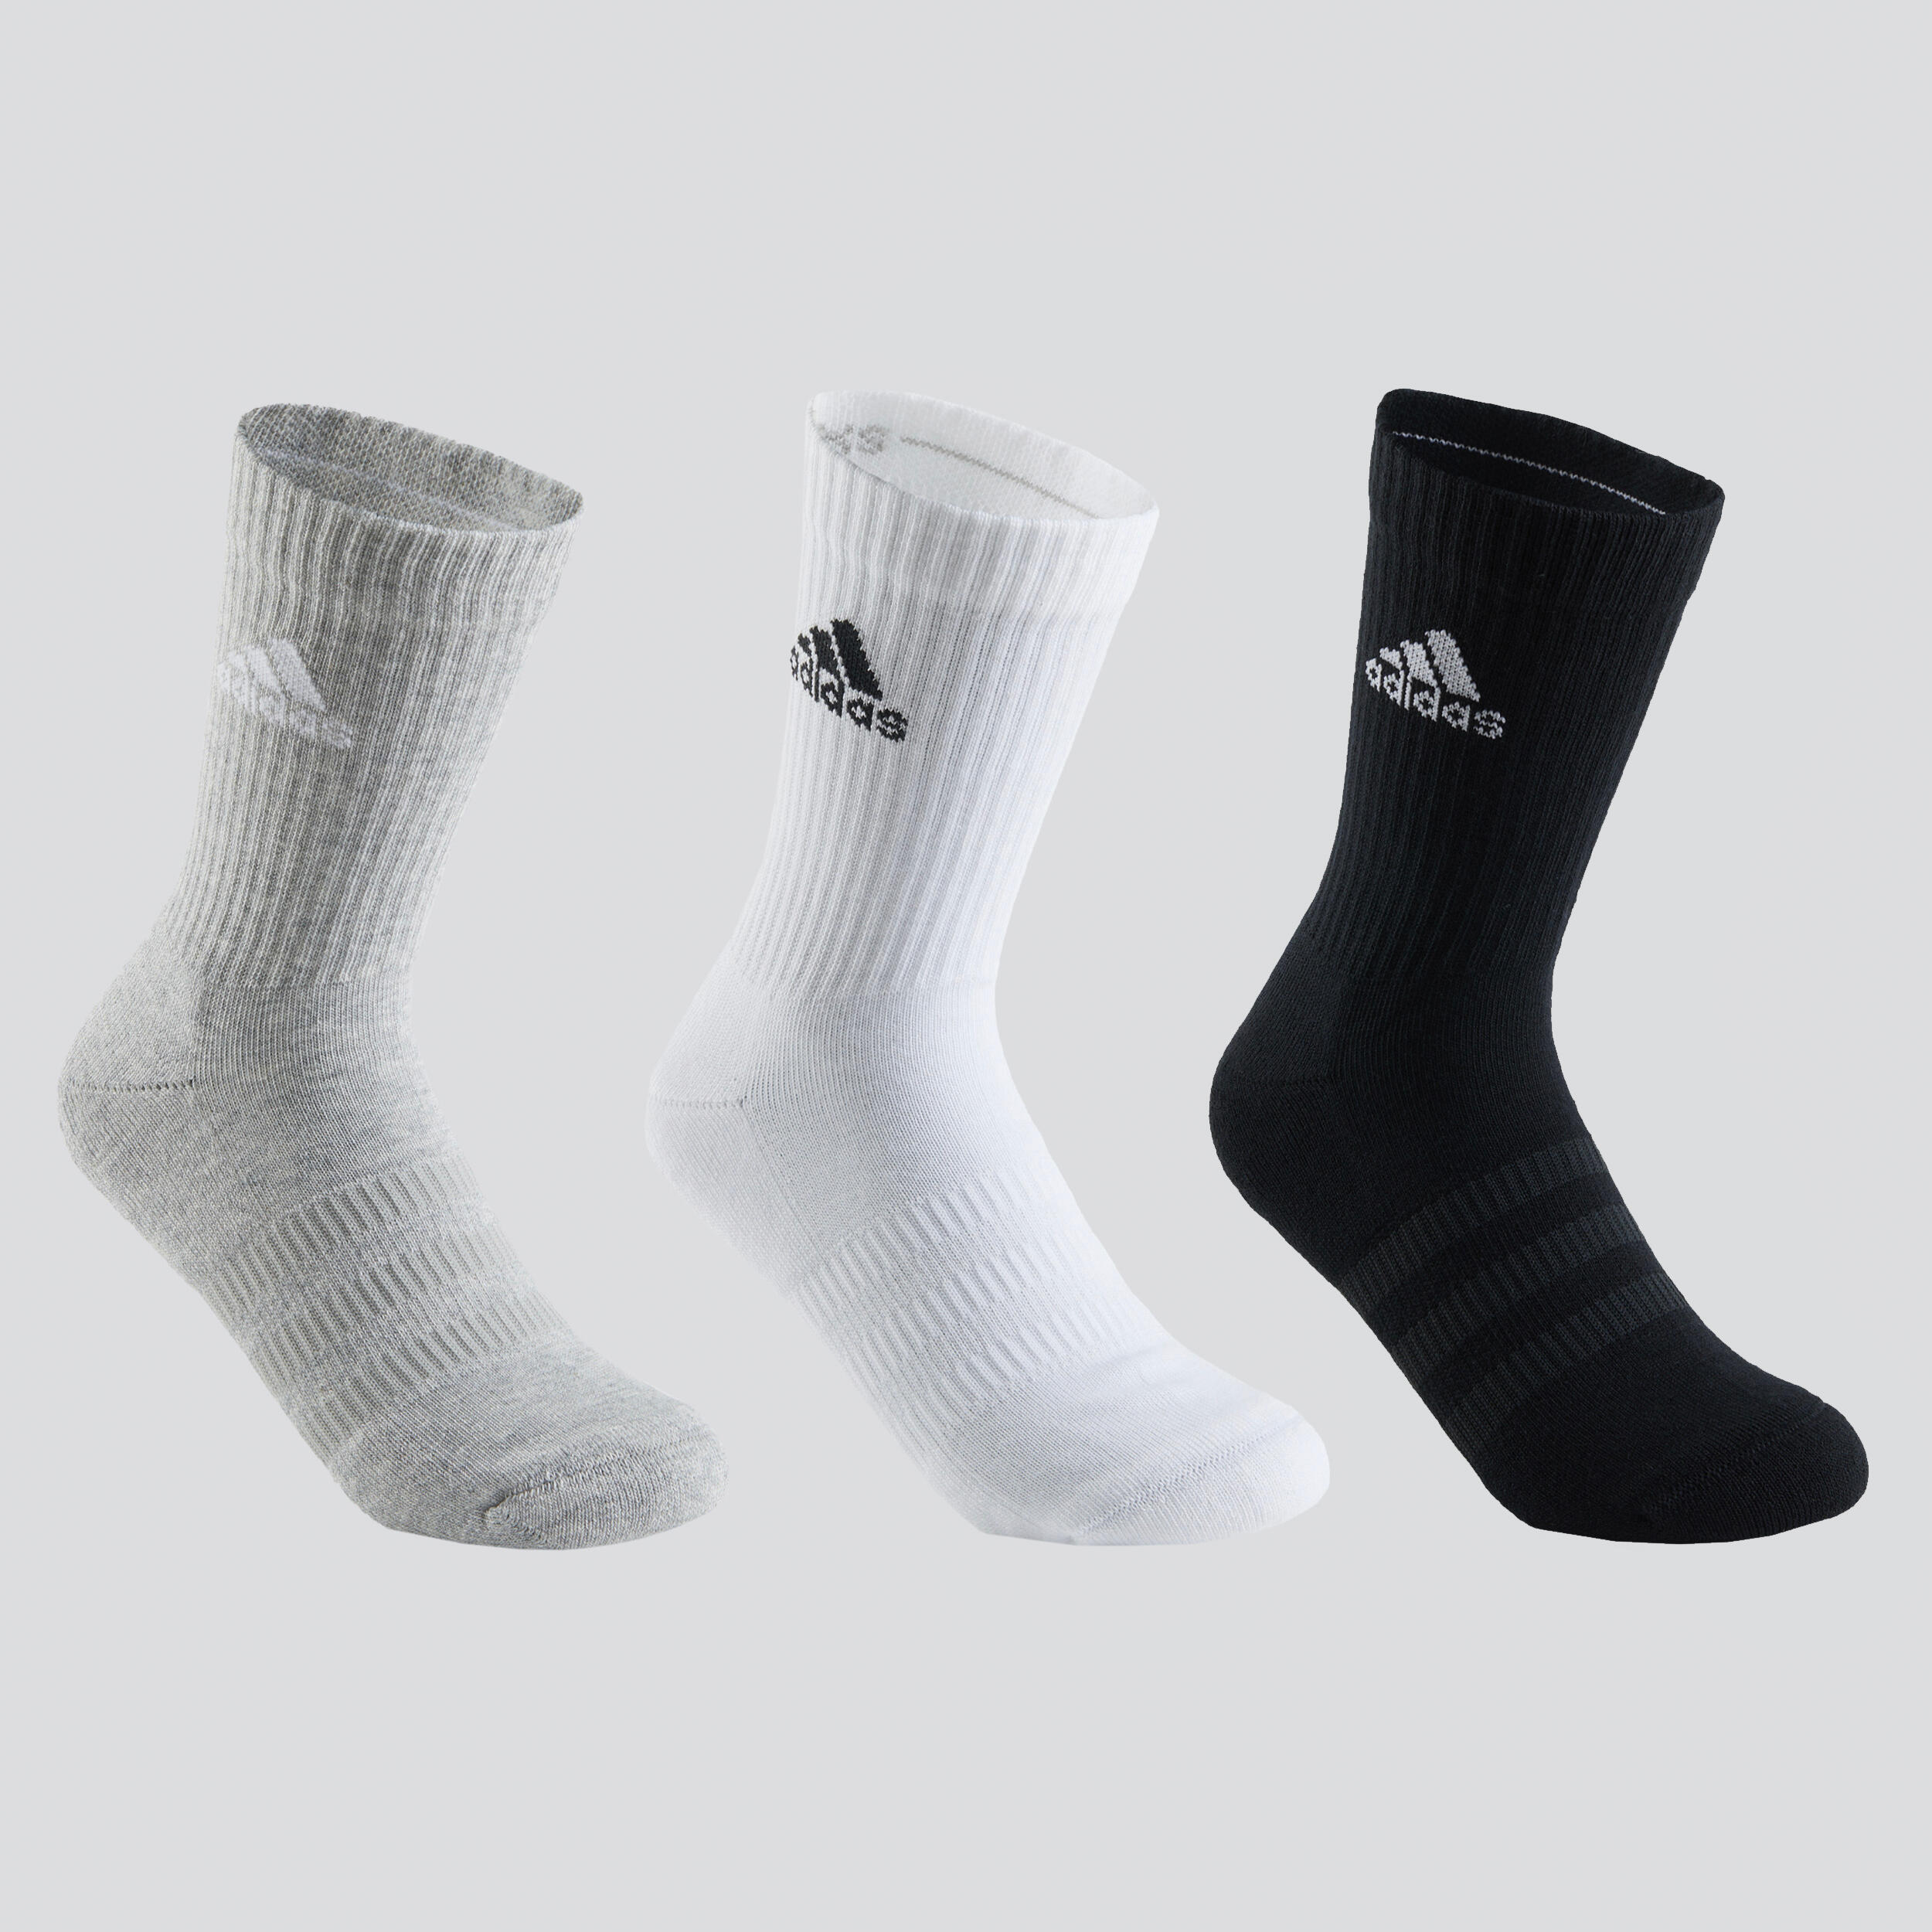 Decathlon | Calze lunghe adulto Adidas grigio-bianco-nero x3 |  Adidas